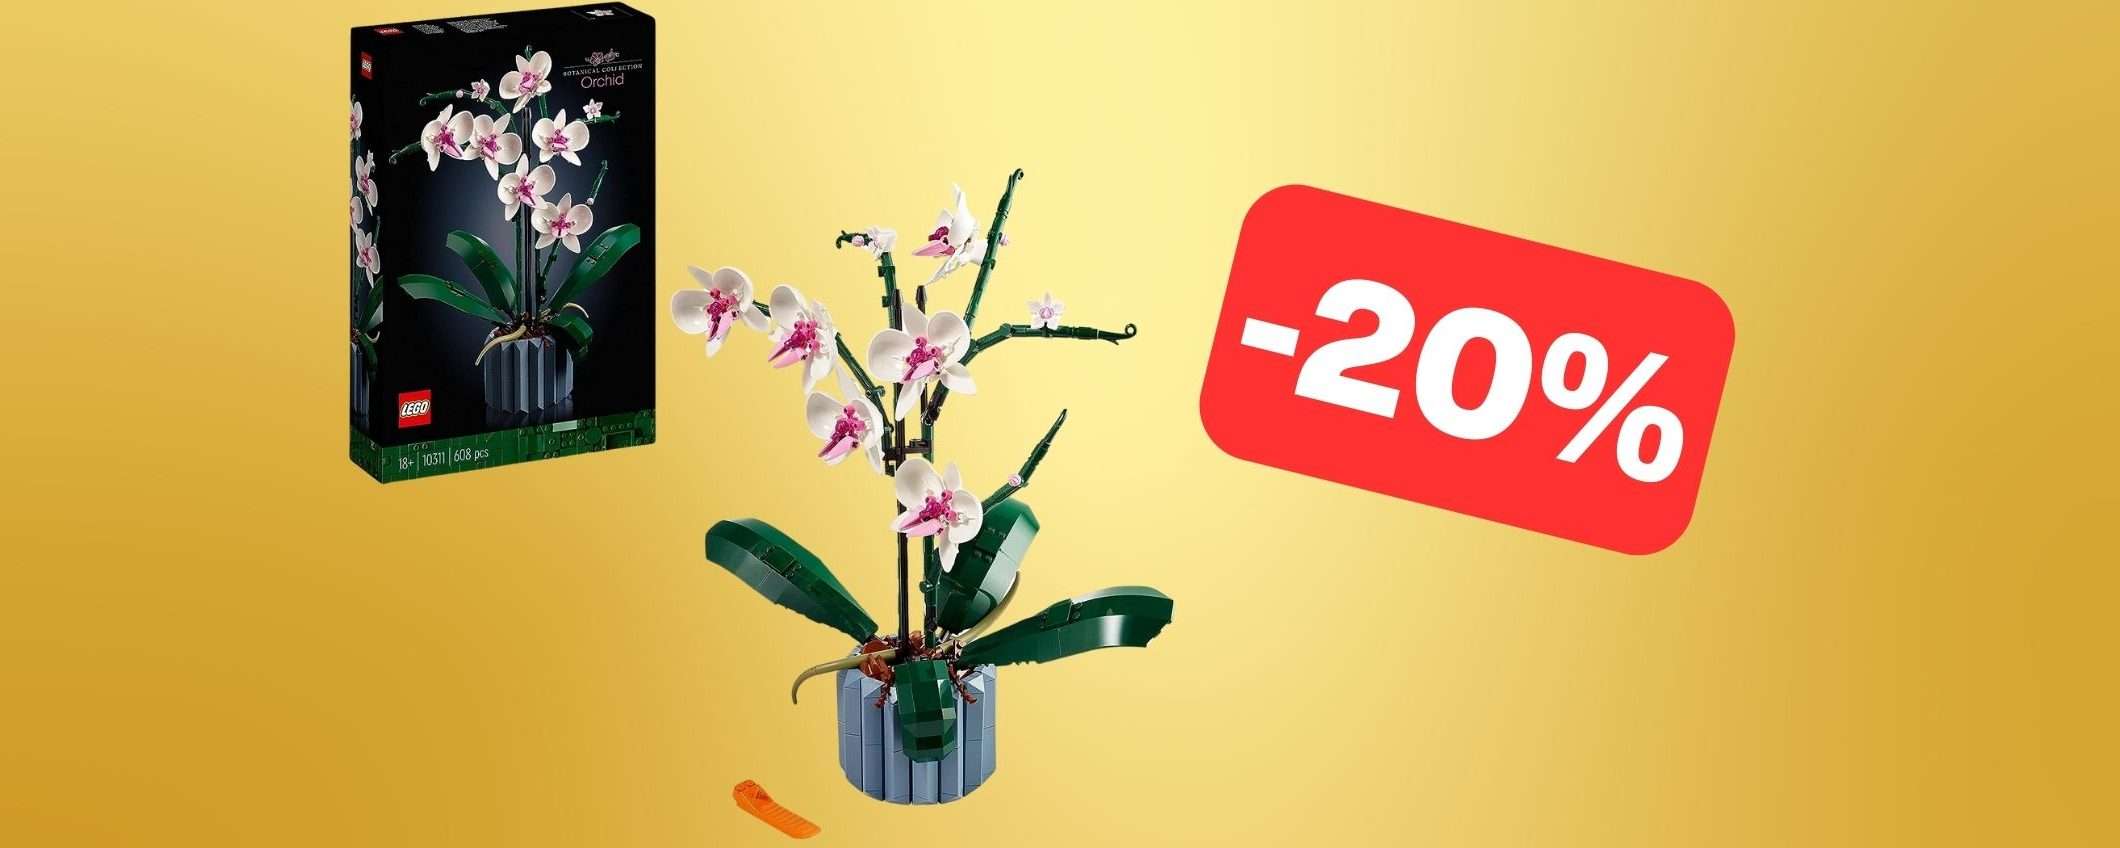 Set LEGO Orchidea: FANTASTICO SCONTO Amazon (-20%)